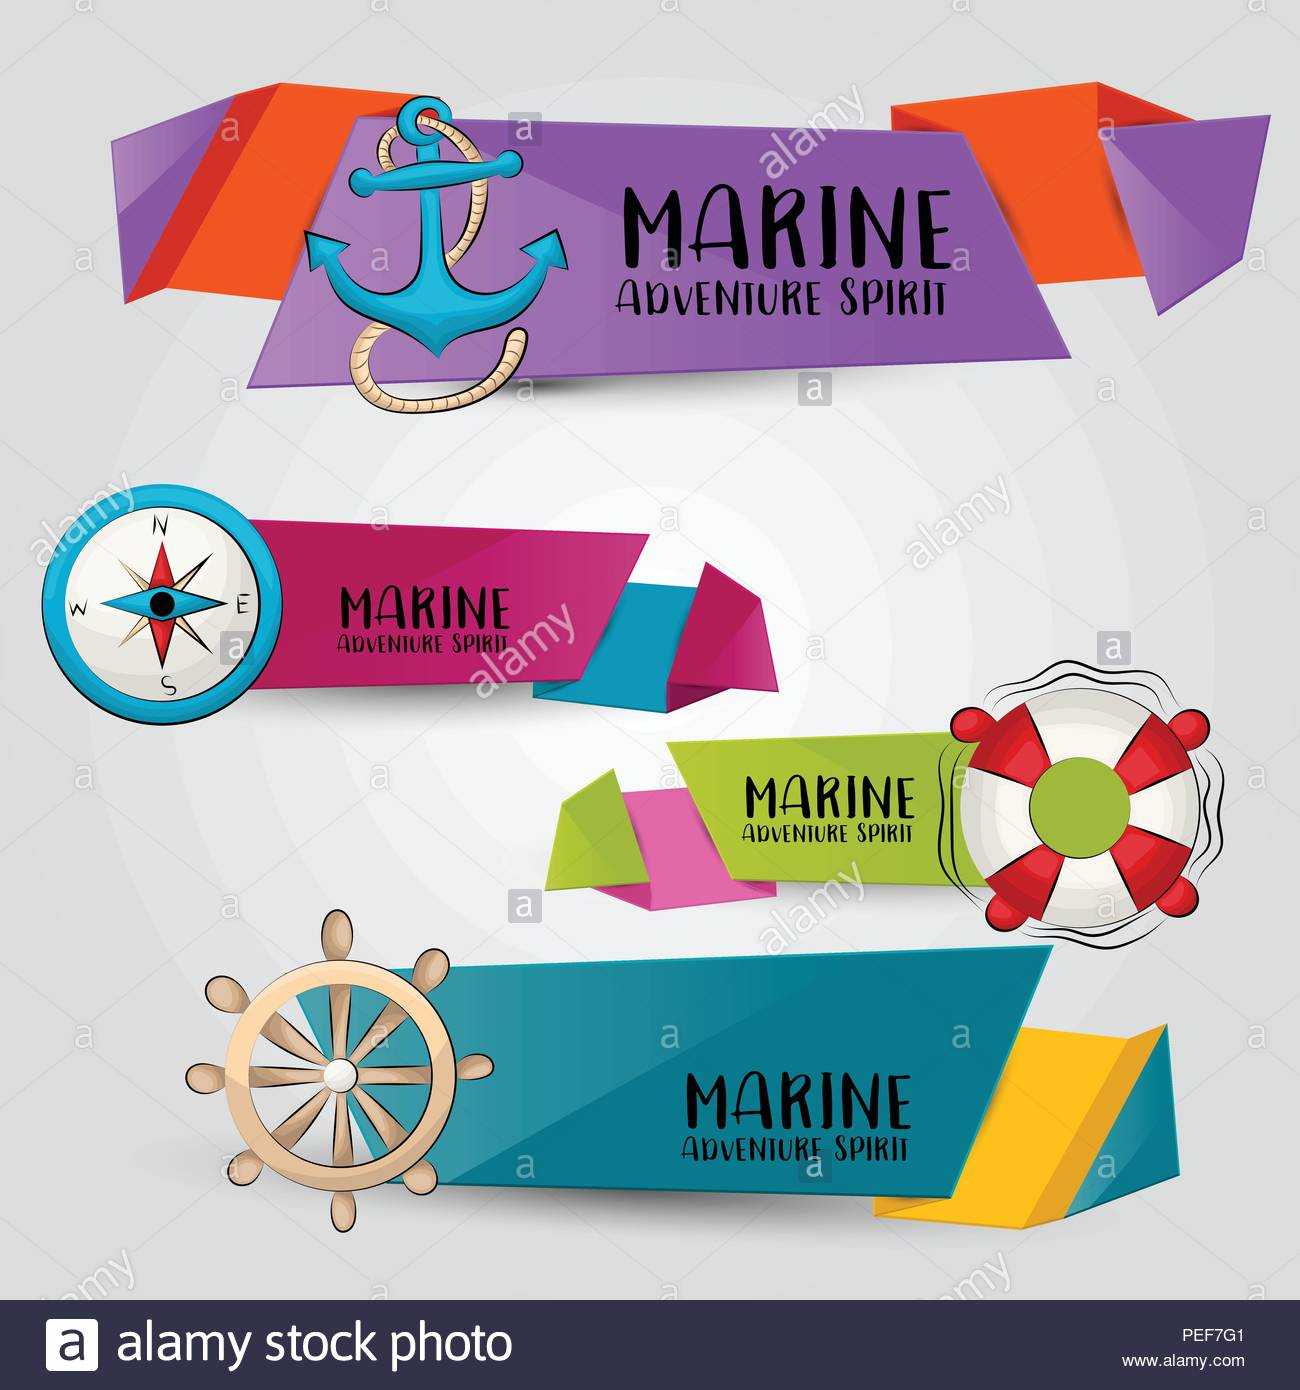 Marine Nautical Travel Concept. Horizontal Banner Template With Nautical Banner Template